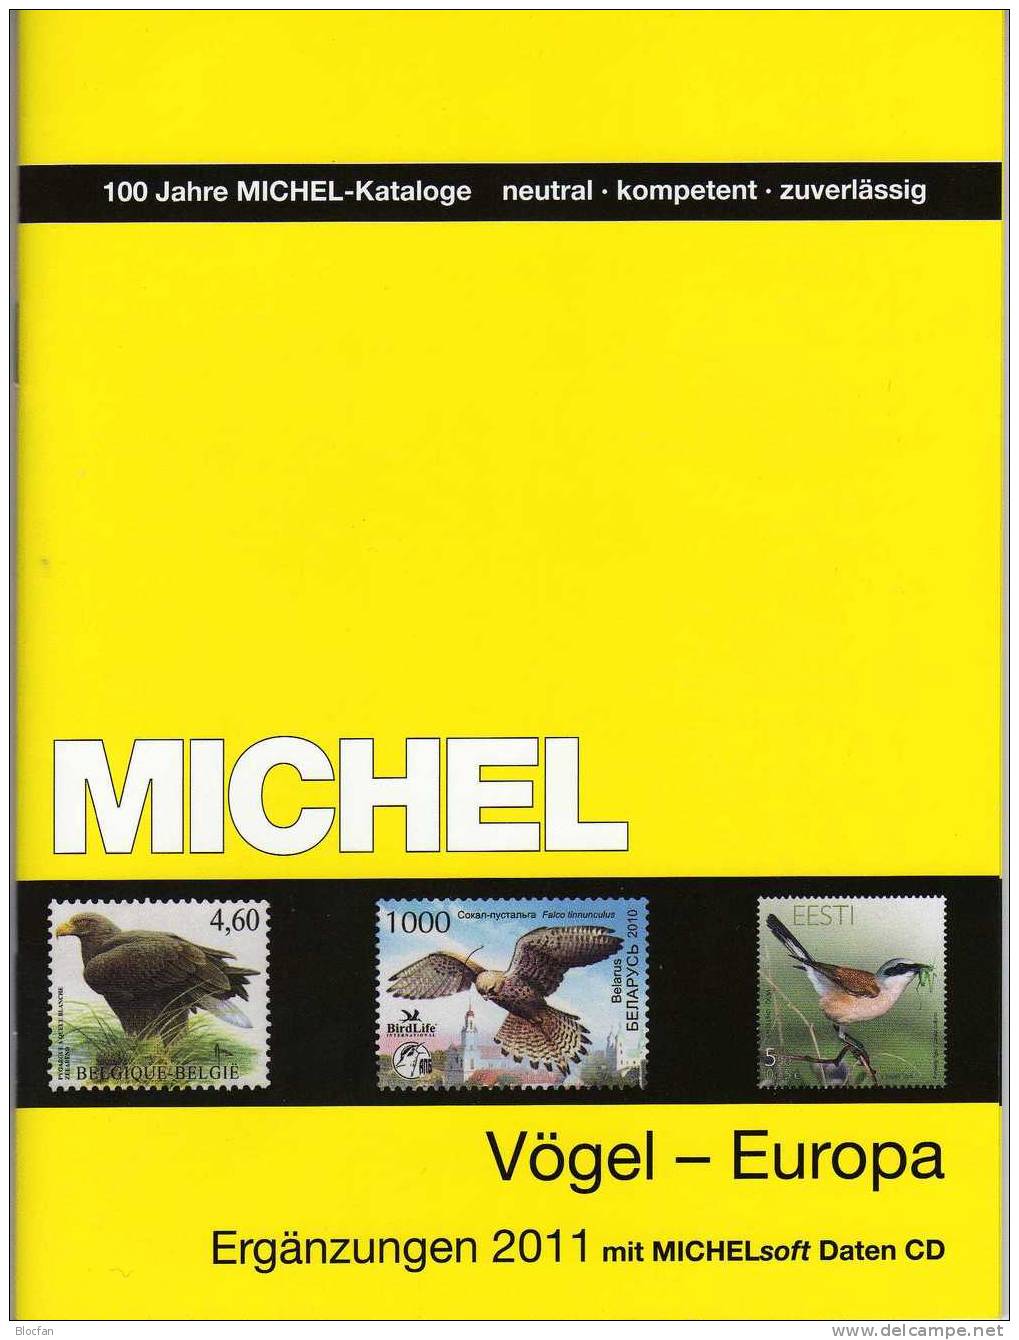 Vögel Ergänzung Europa Michel Katalog 2011 Neu 50€ Motiv-Briefmarken Mit CD-Rom Name Such-Register Catalogue From Europe - CDs